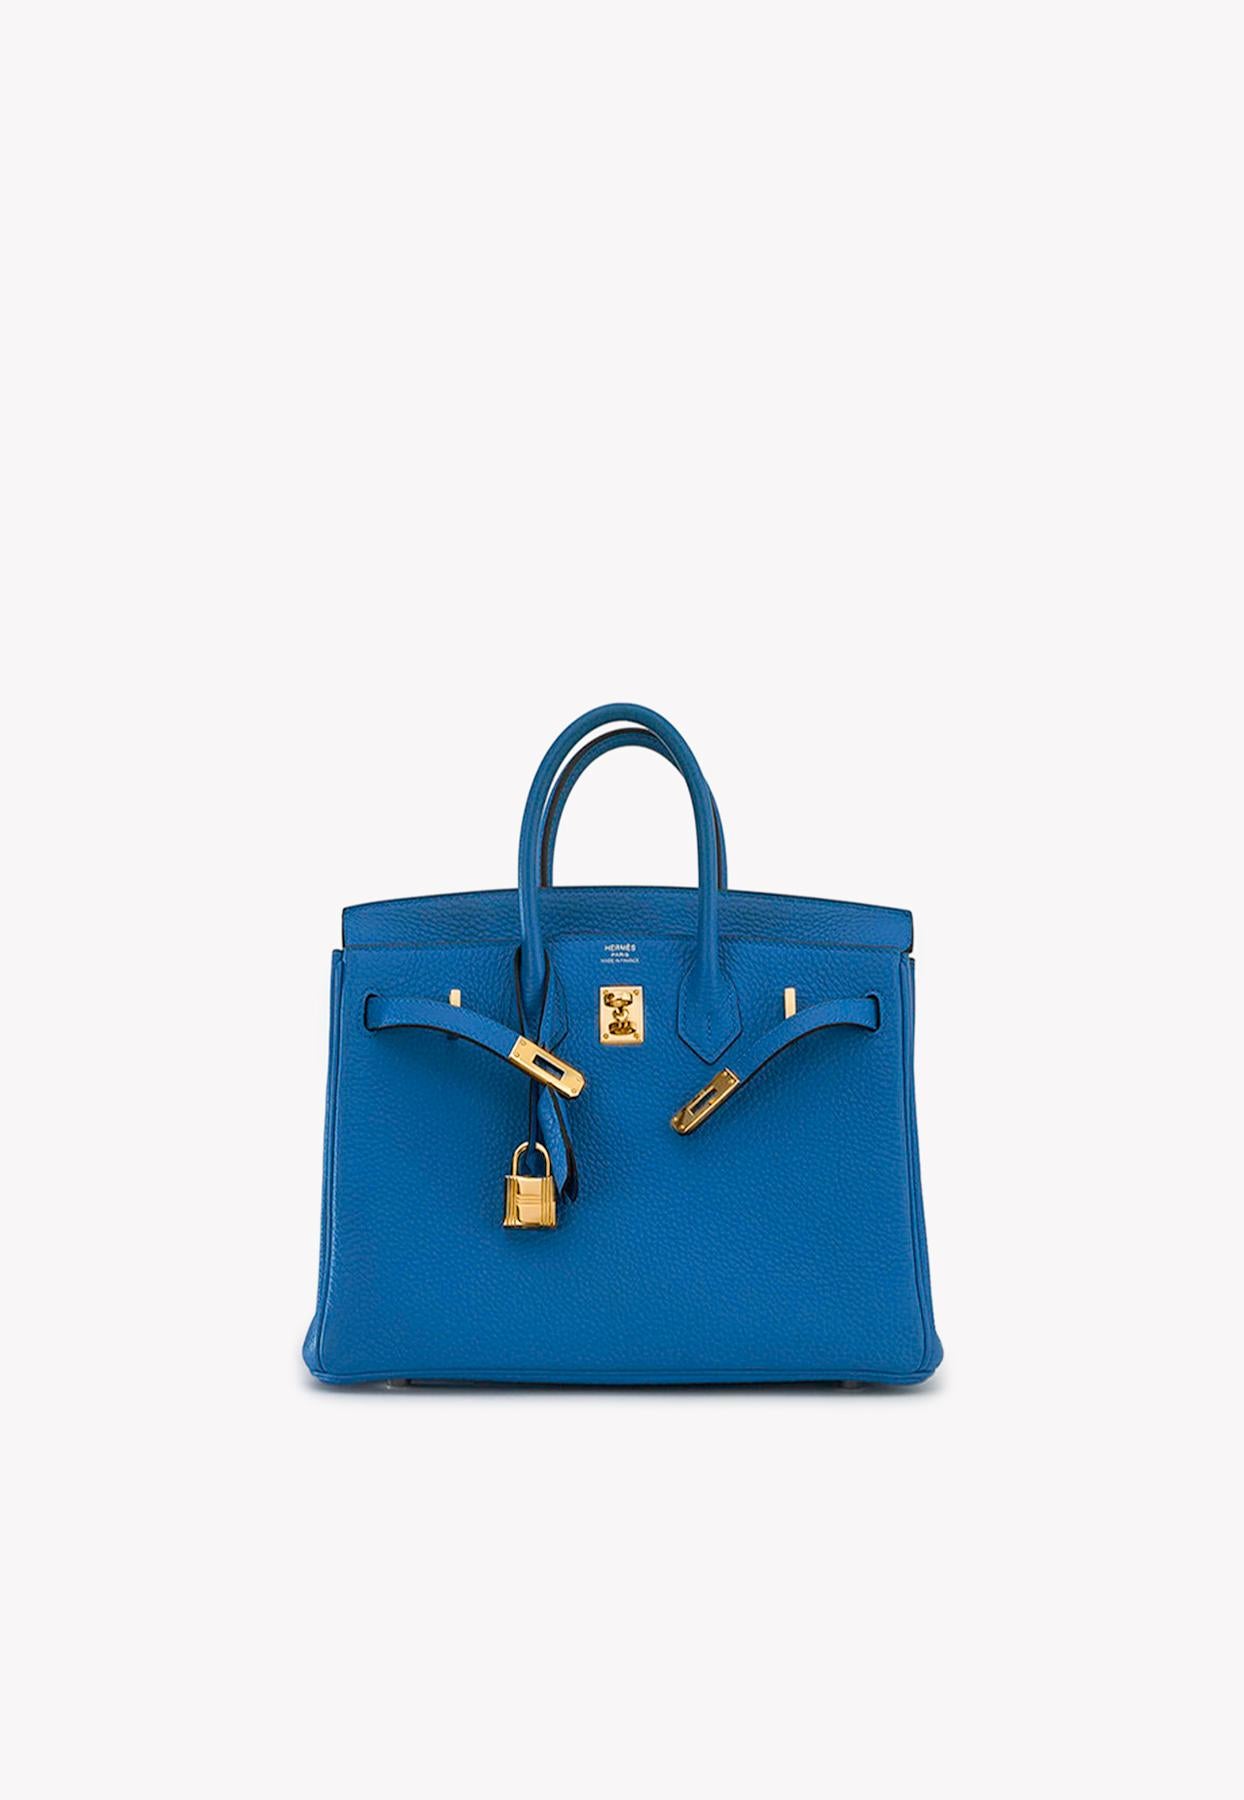 Women's Birkin 25 Top Handle Bag in Bleu Zanzibar Togo with Gold Hardware For Sale